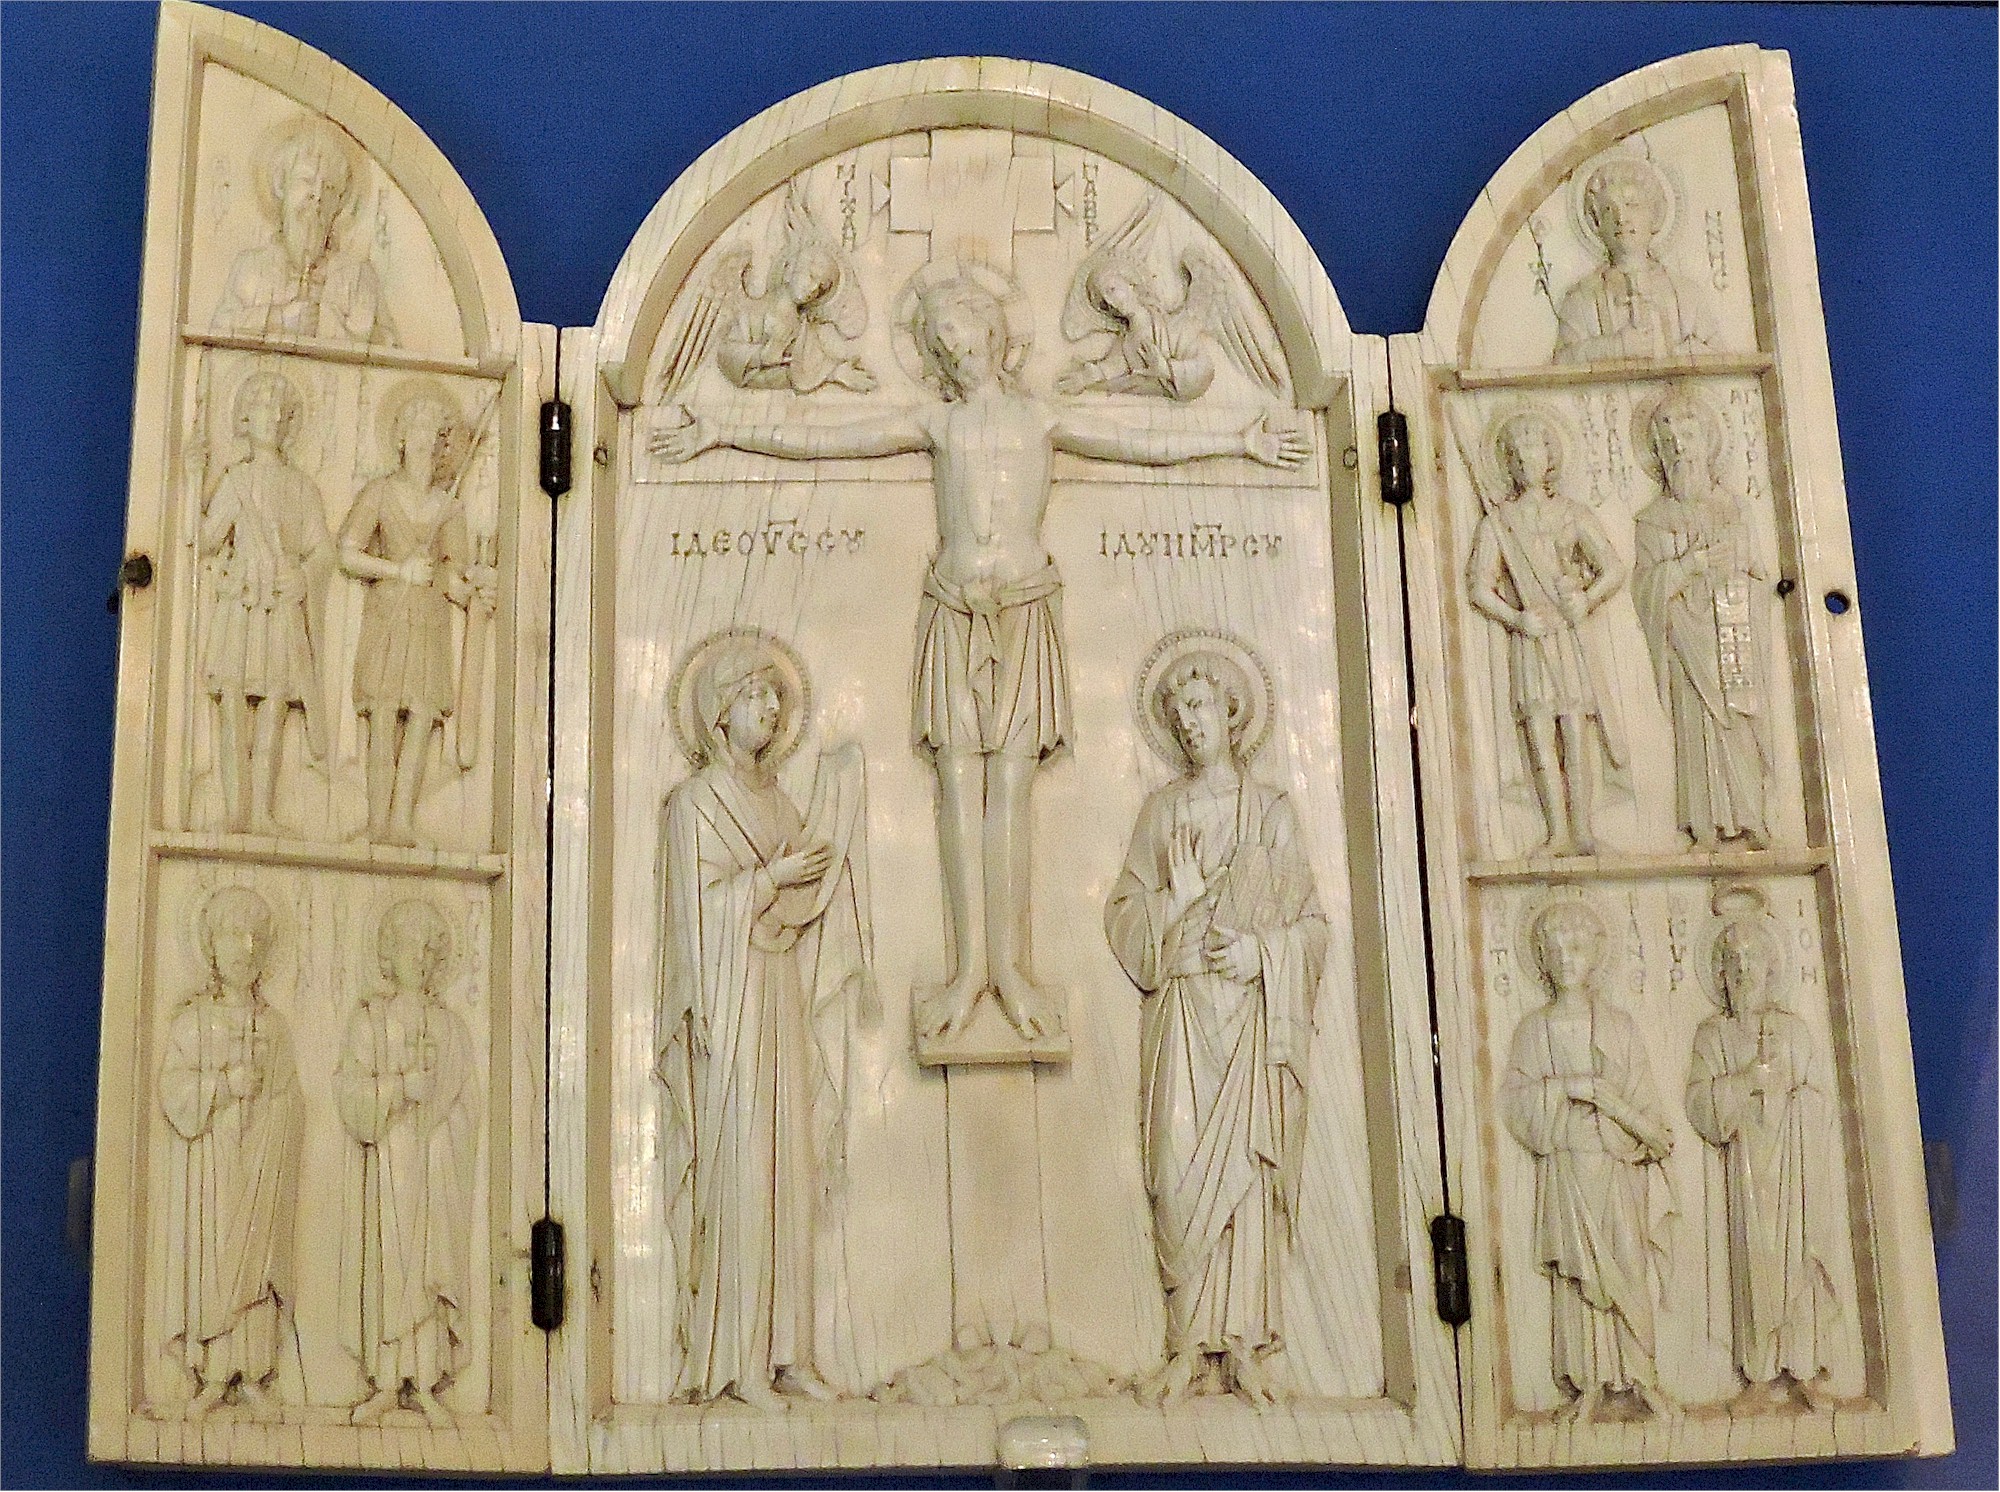  Ivory Triptych, British Museum